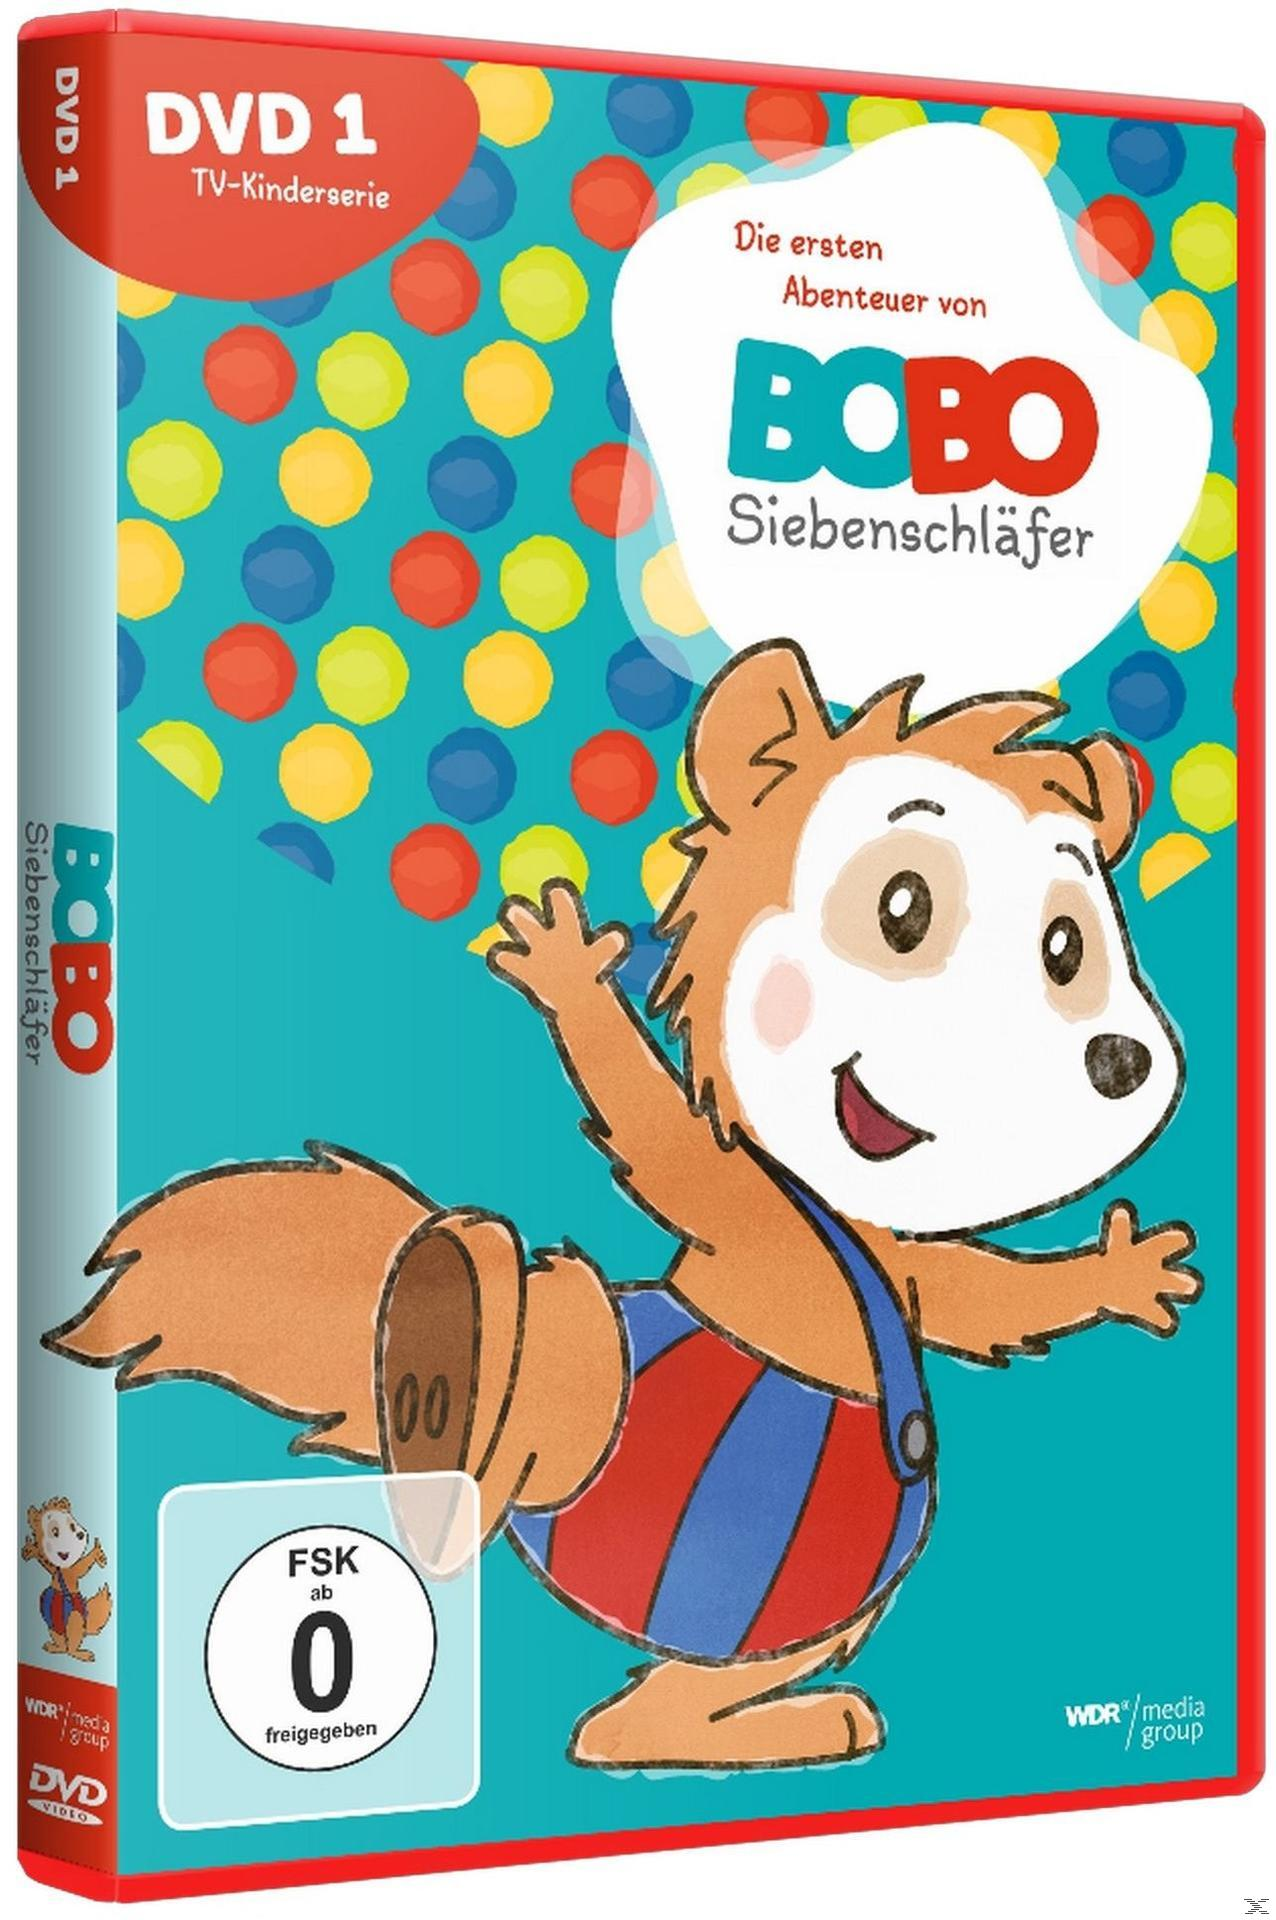 Siebenschläfer DVD - Bobo 1 DVD